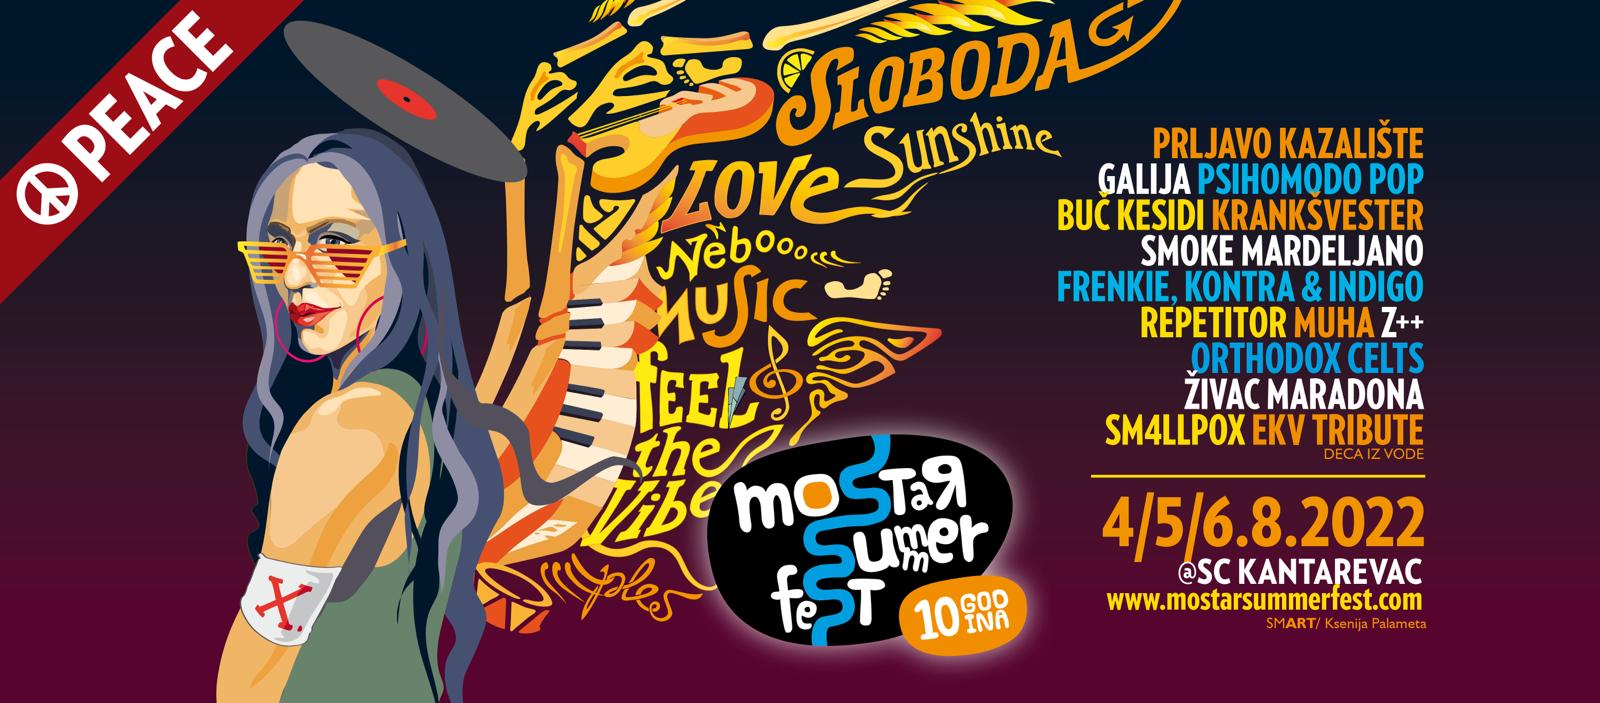 Mostar Summer Fest slavi 10 godina!